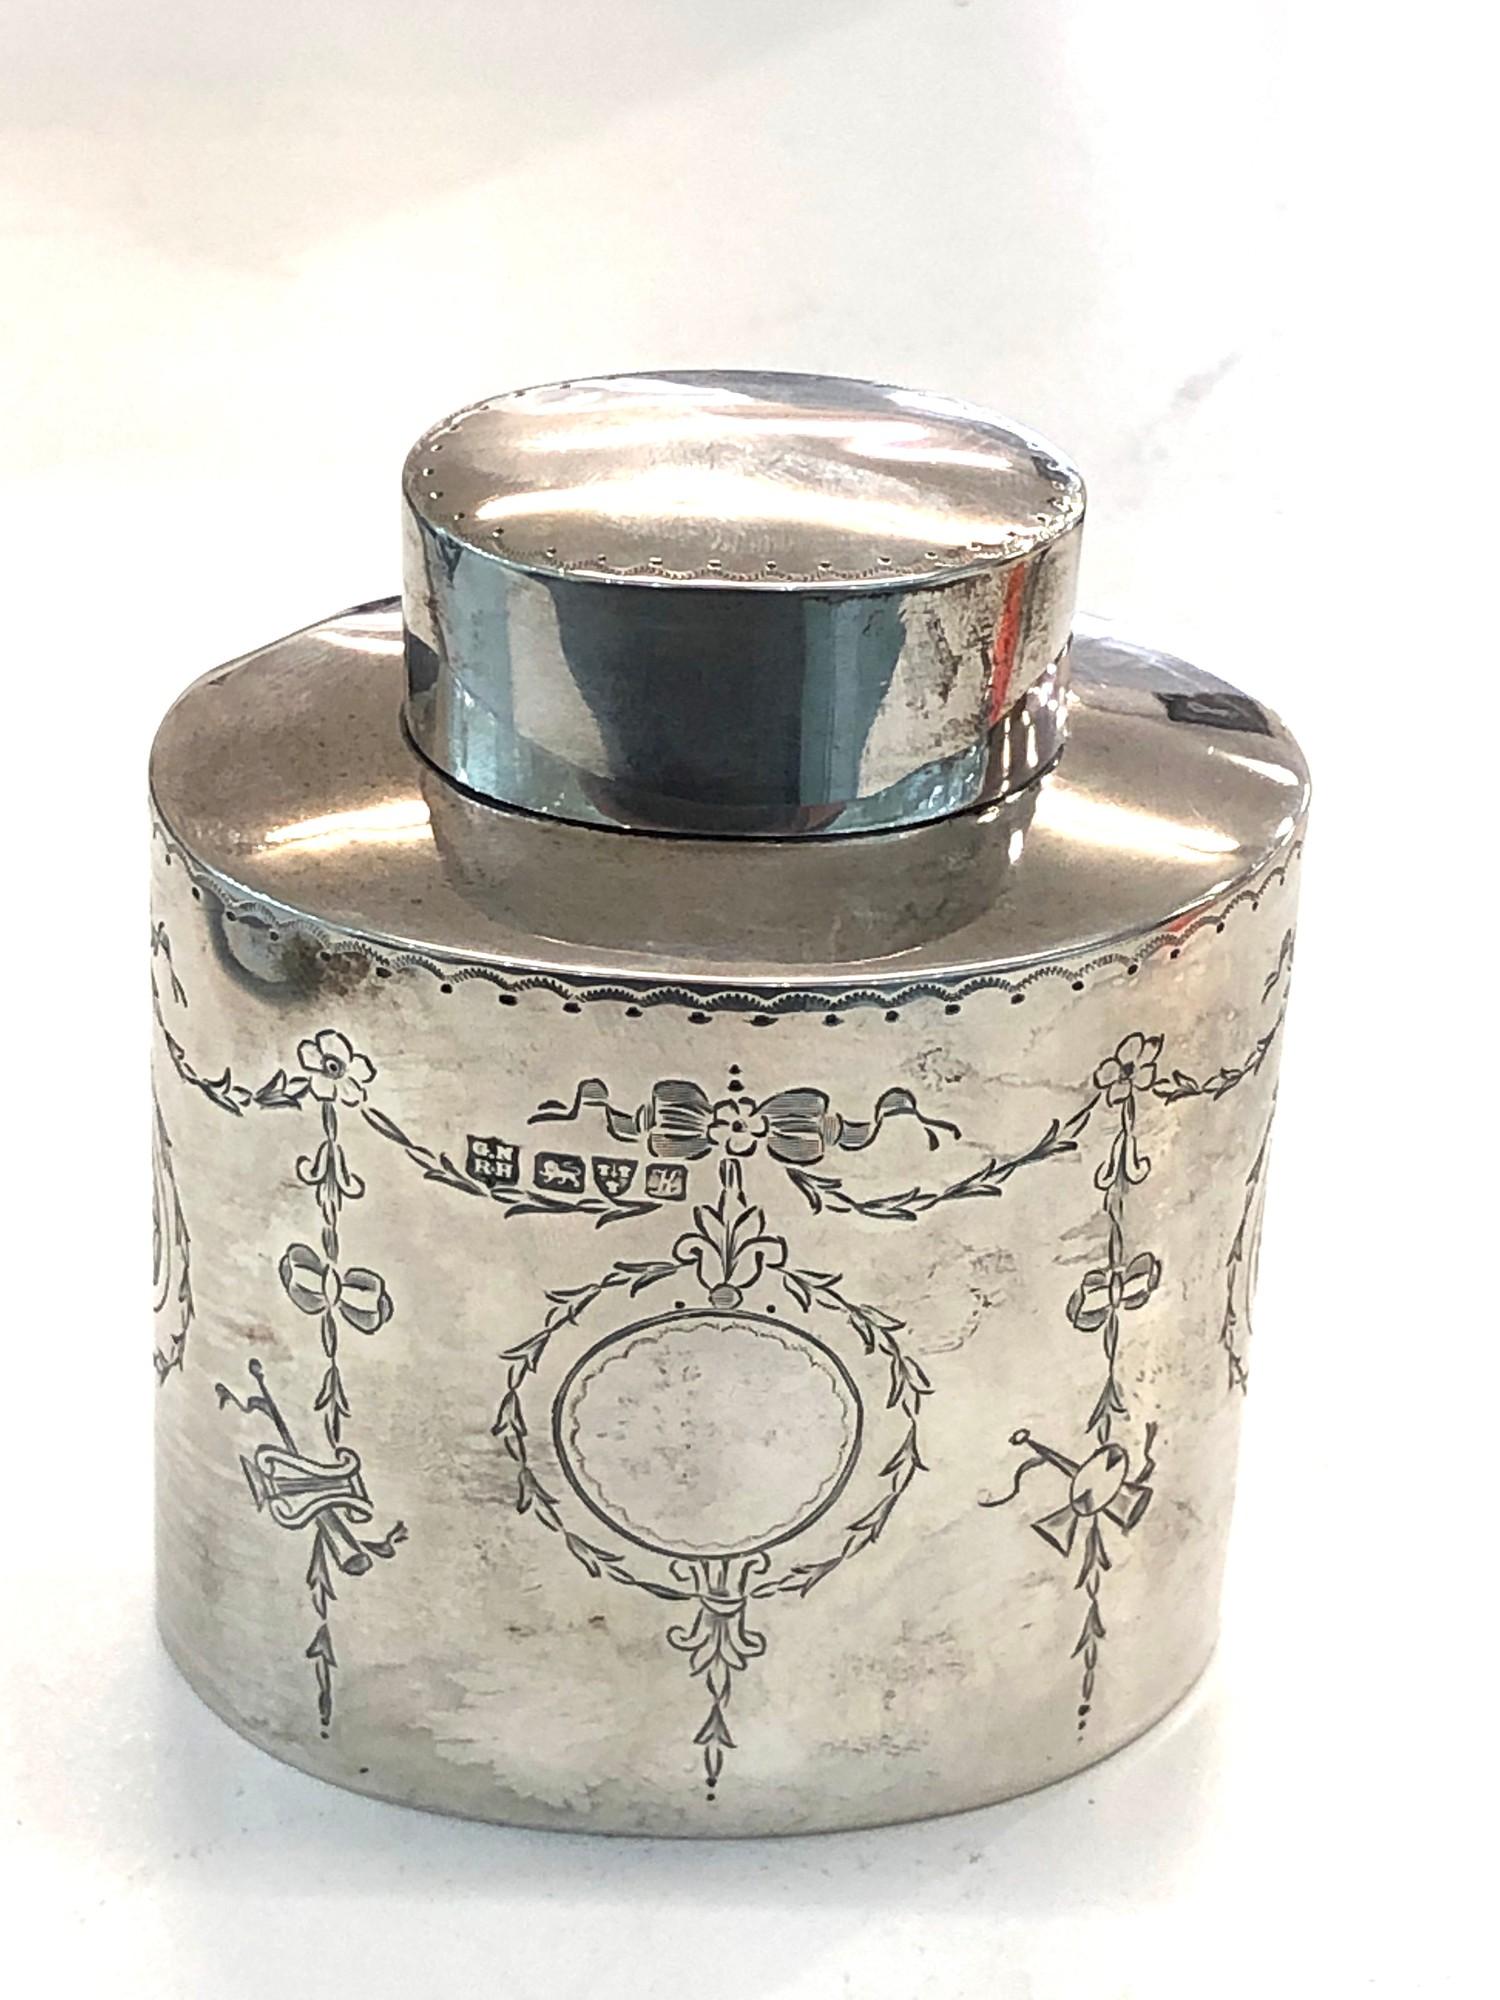 Antique silver tea caddy Chester silver hallmarks weight 124g